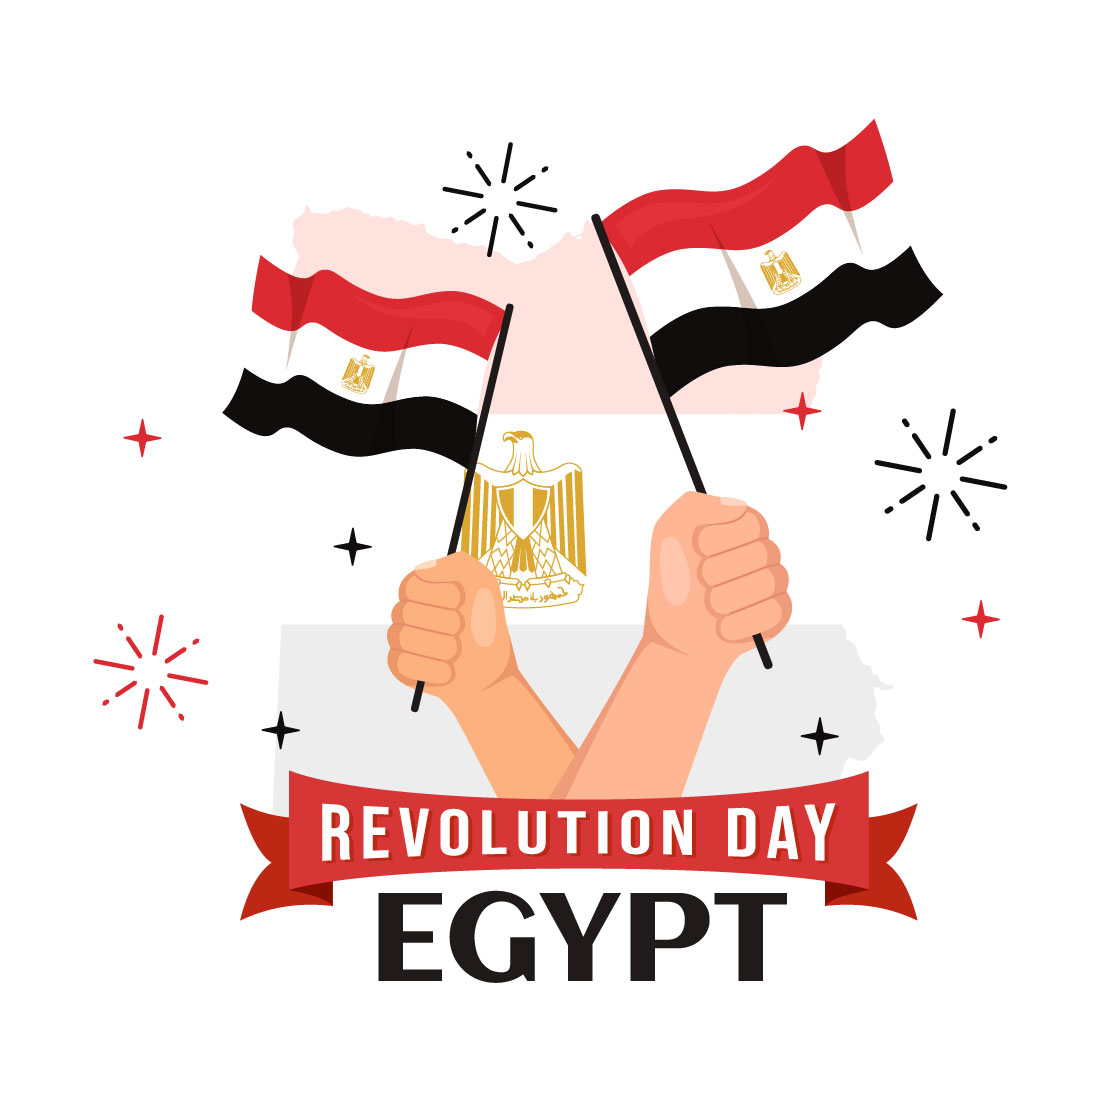 13 Egypt Revolution Day Illustration preview image.